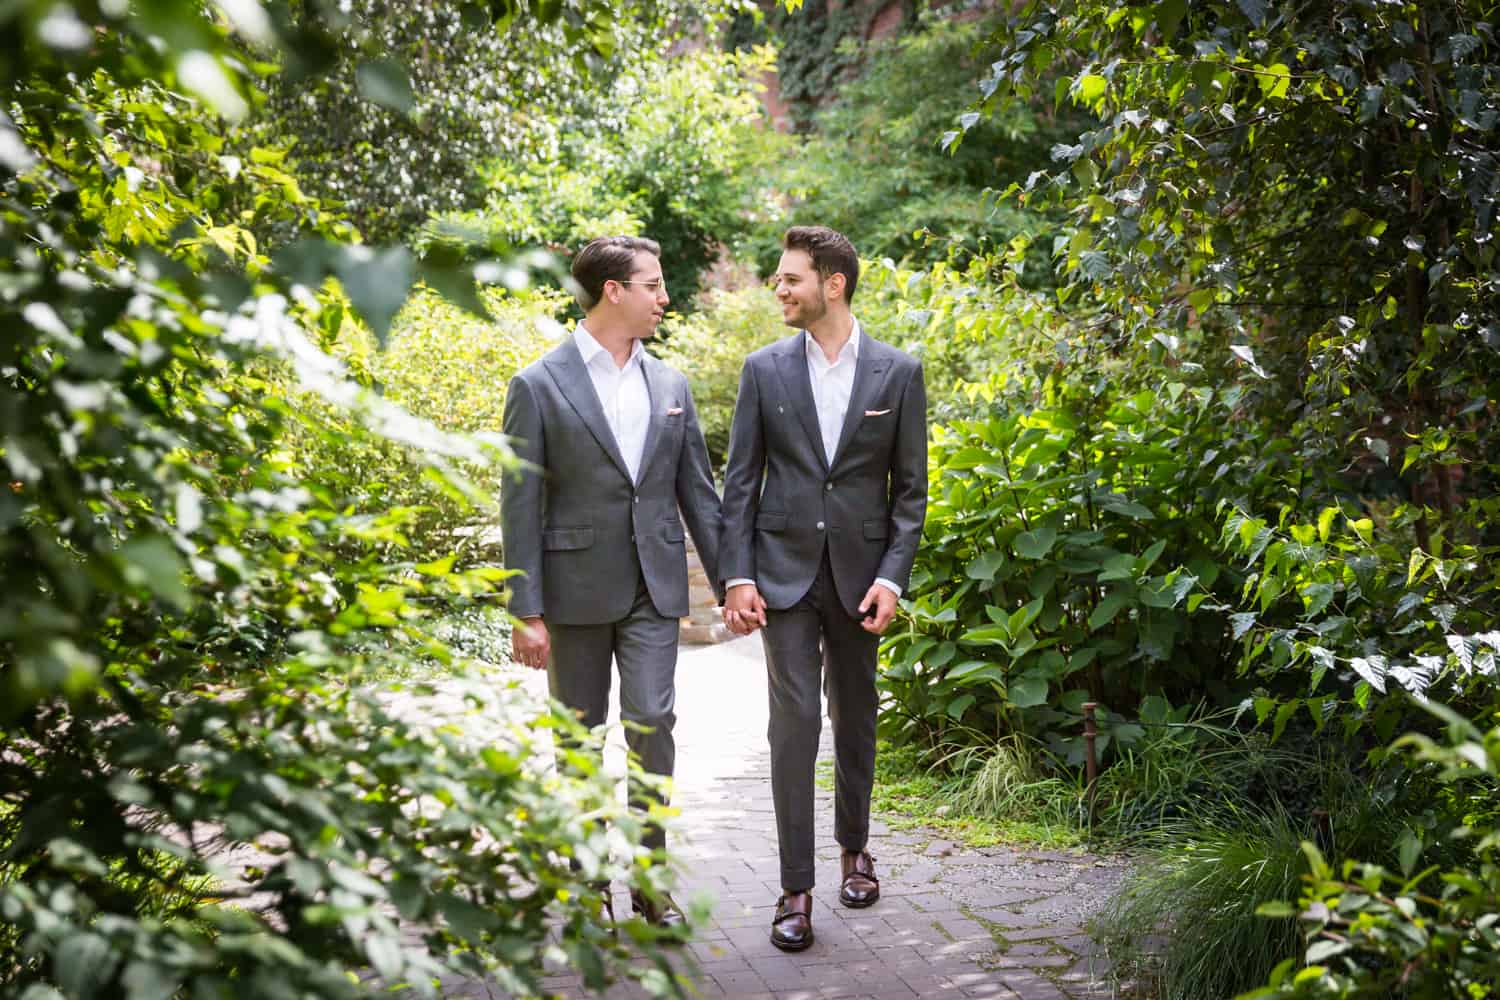 Greenpoint Loft wedding photos of two grooms walking through garden at St. Ann's Warehouse